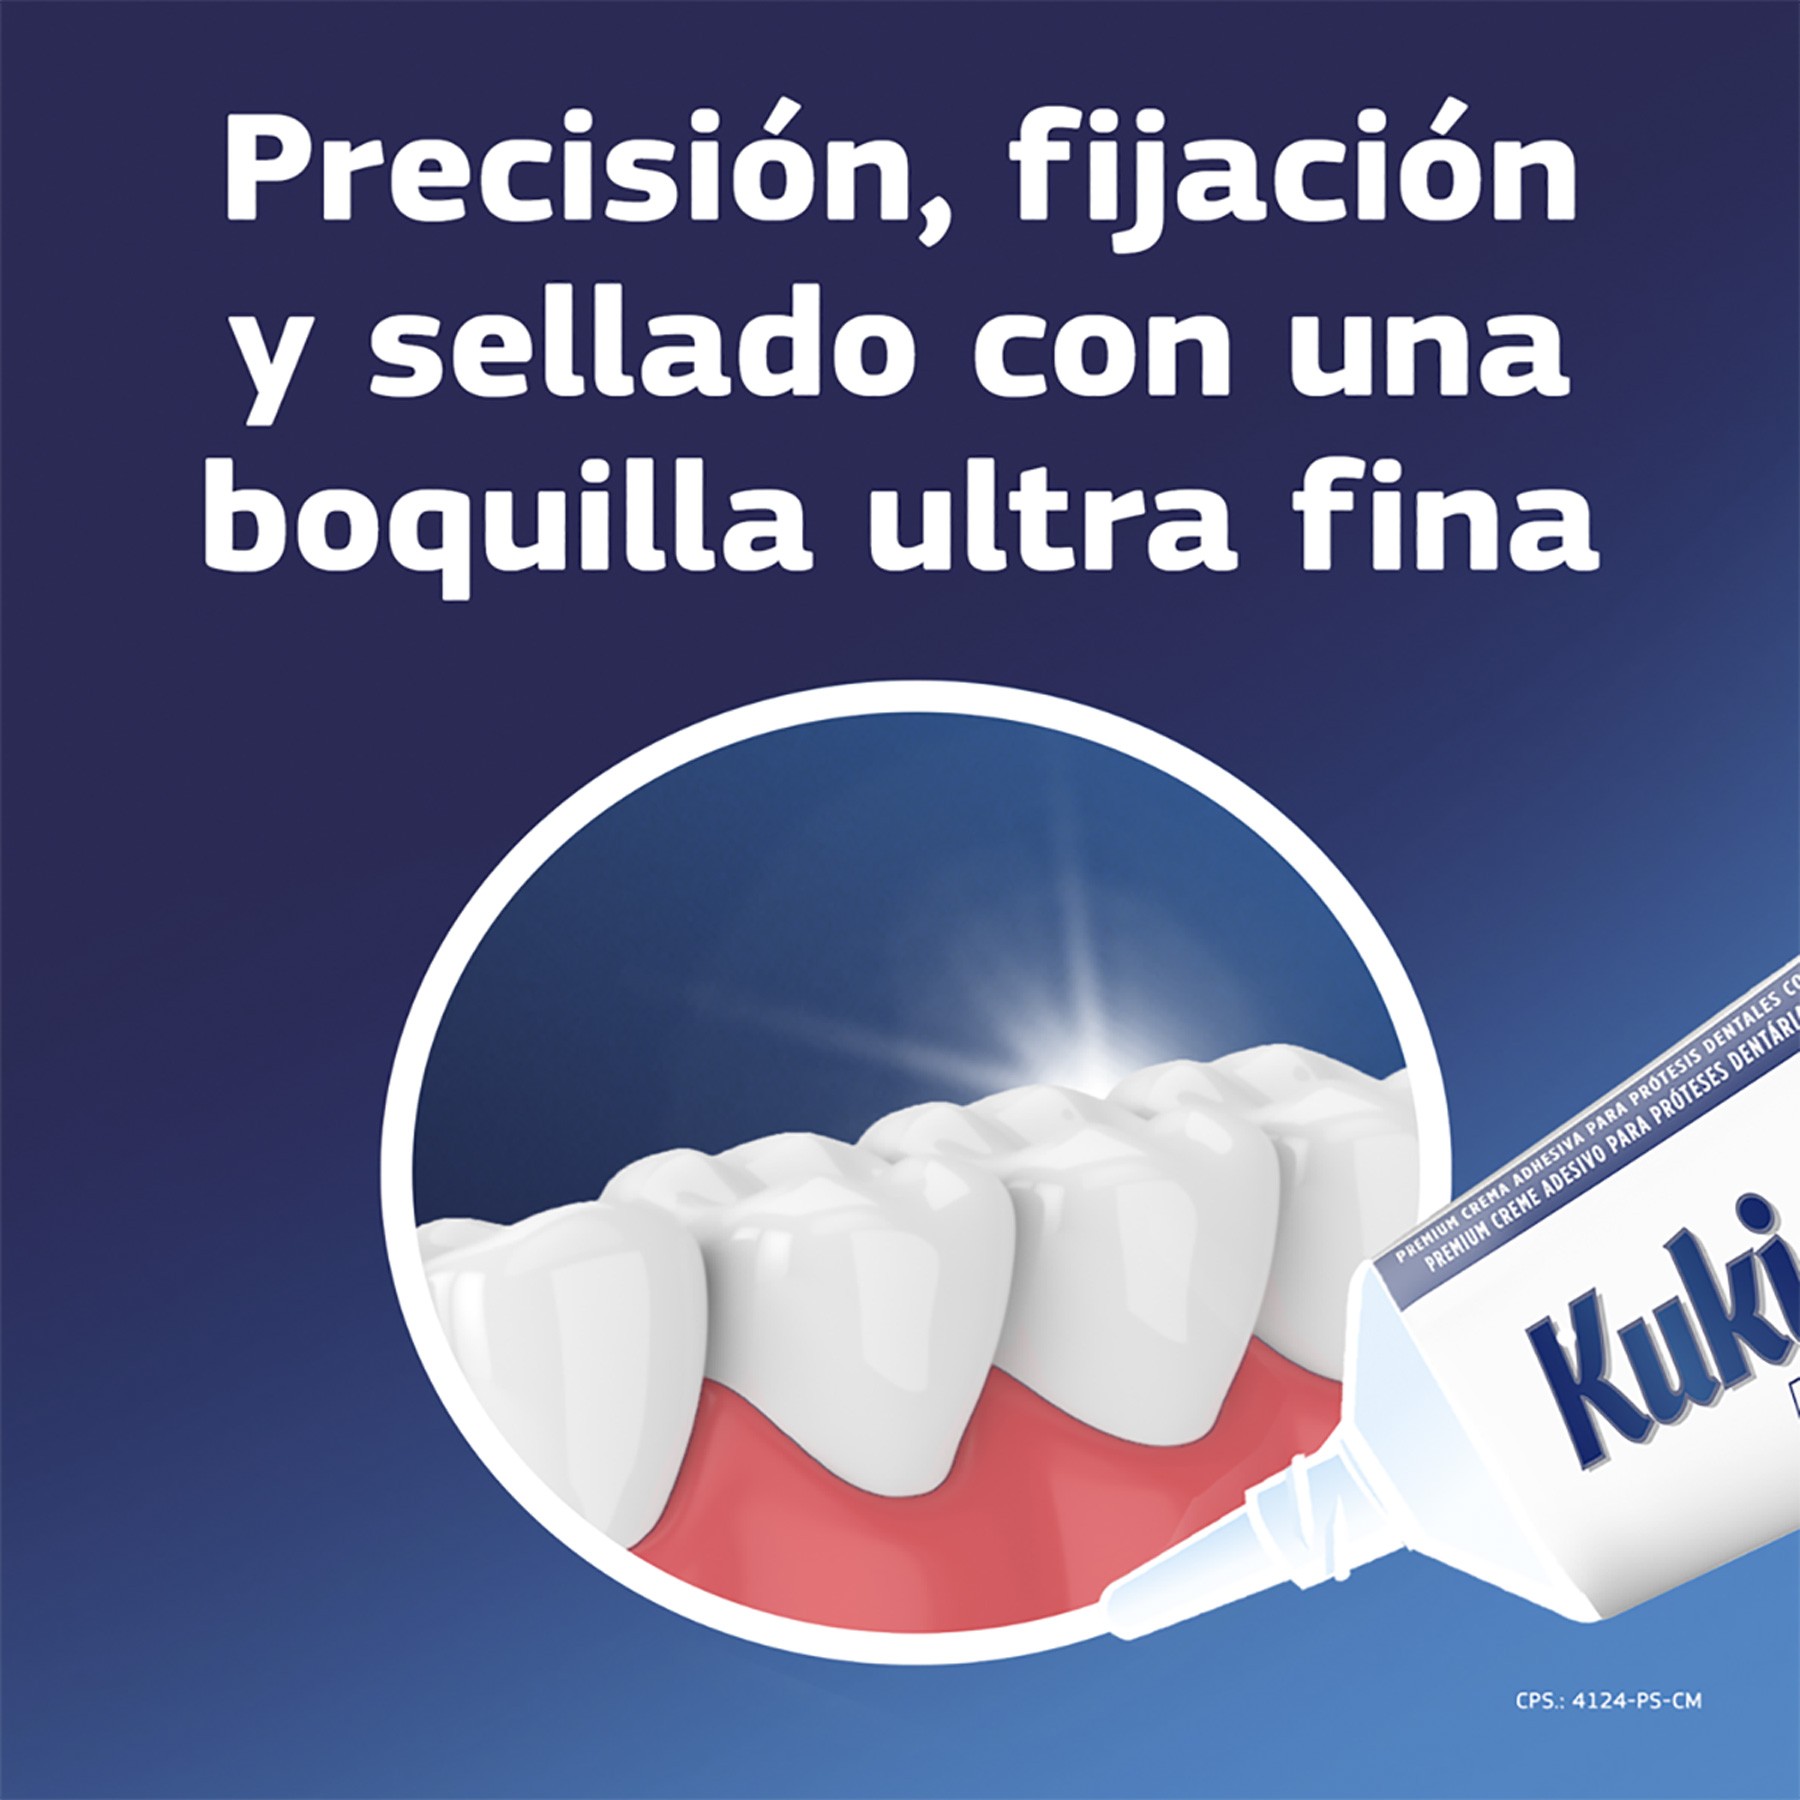 Kukident Pro Plus crema adhesiva prótesis sin sabor 40g